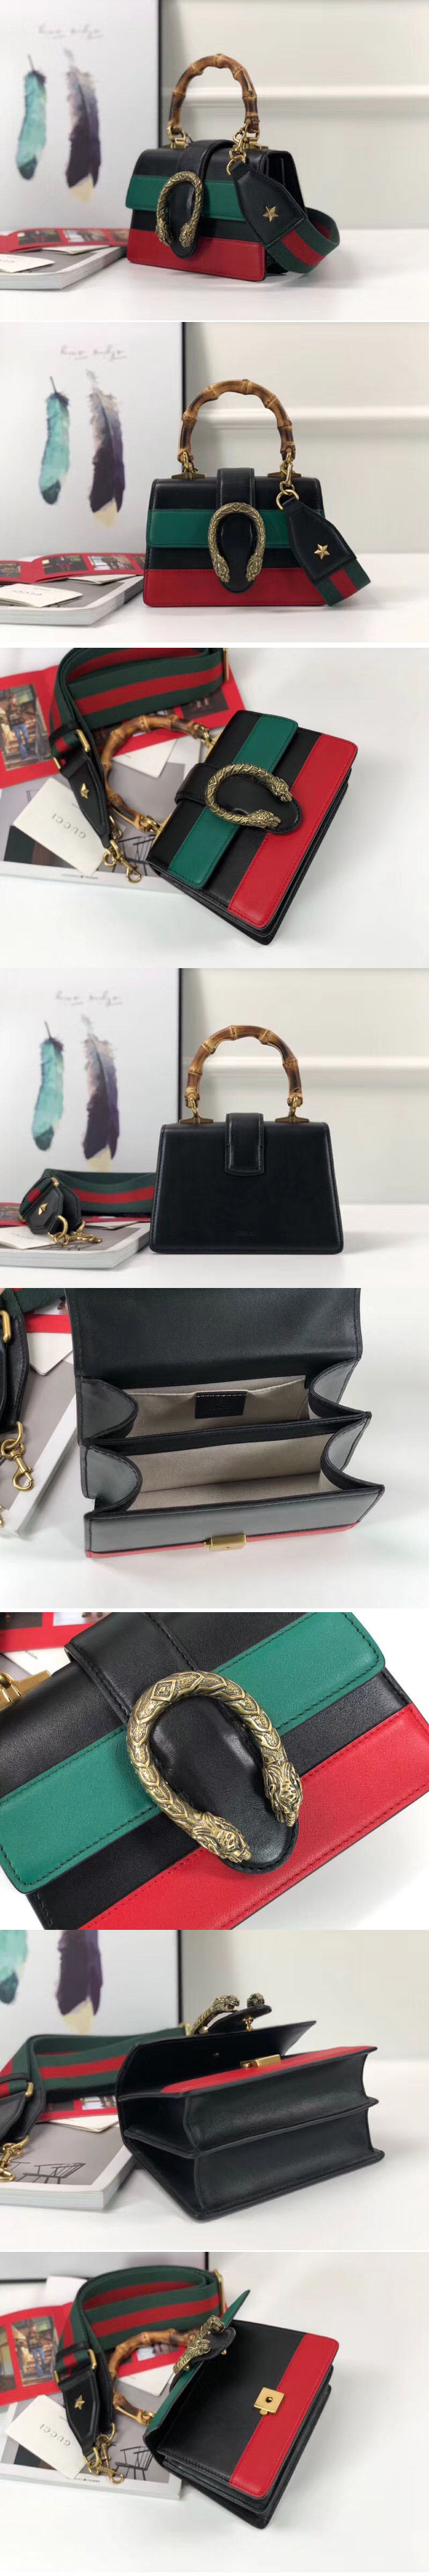 Replica Gucci 523367 Dionysus mini top handle bags Black/Green/Red